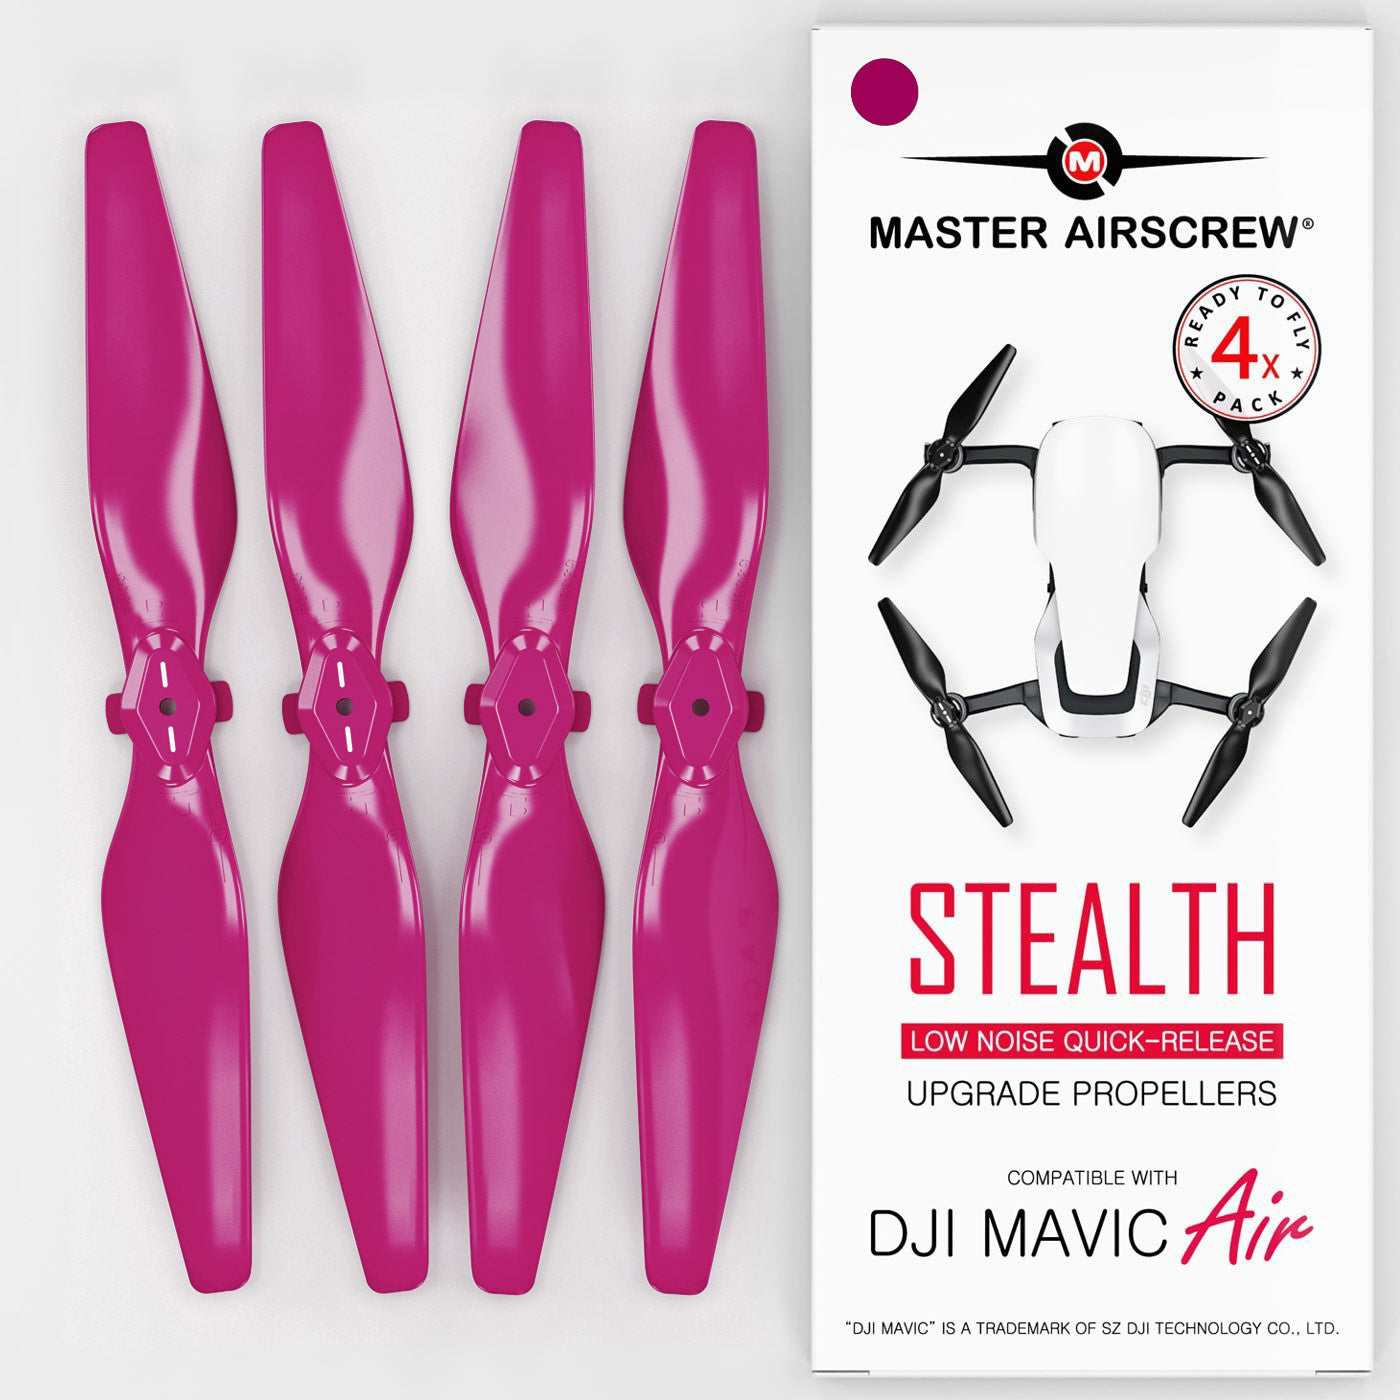 DJI Mavic Air STEALTH Upgrade Propellers - x4 Magenta - Master Airscrew